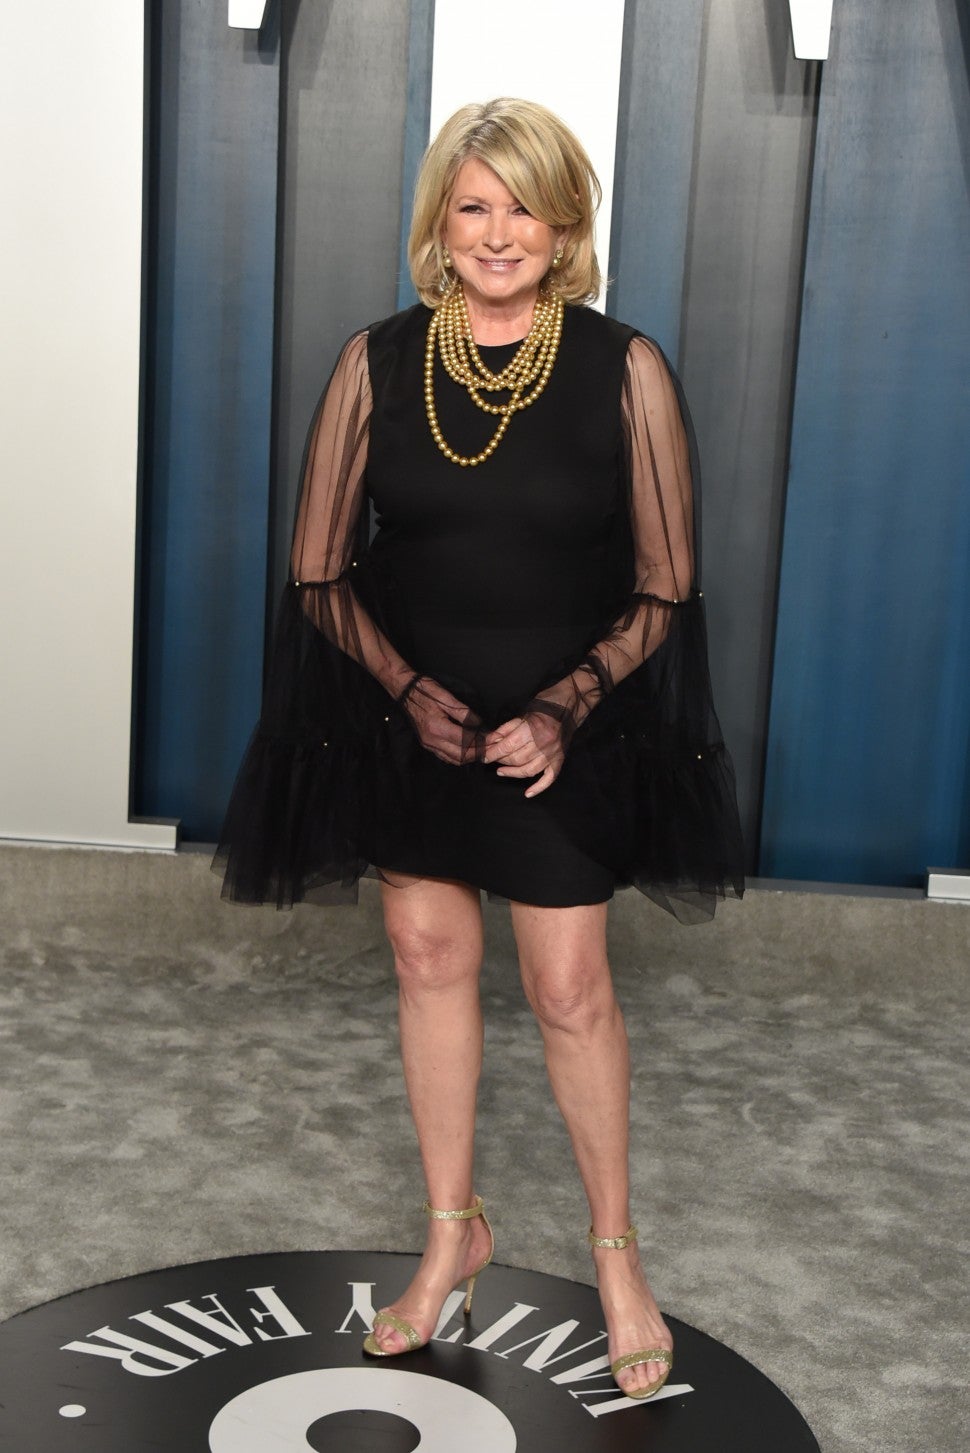 Martha Stewart at 2020 vf party